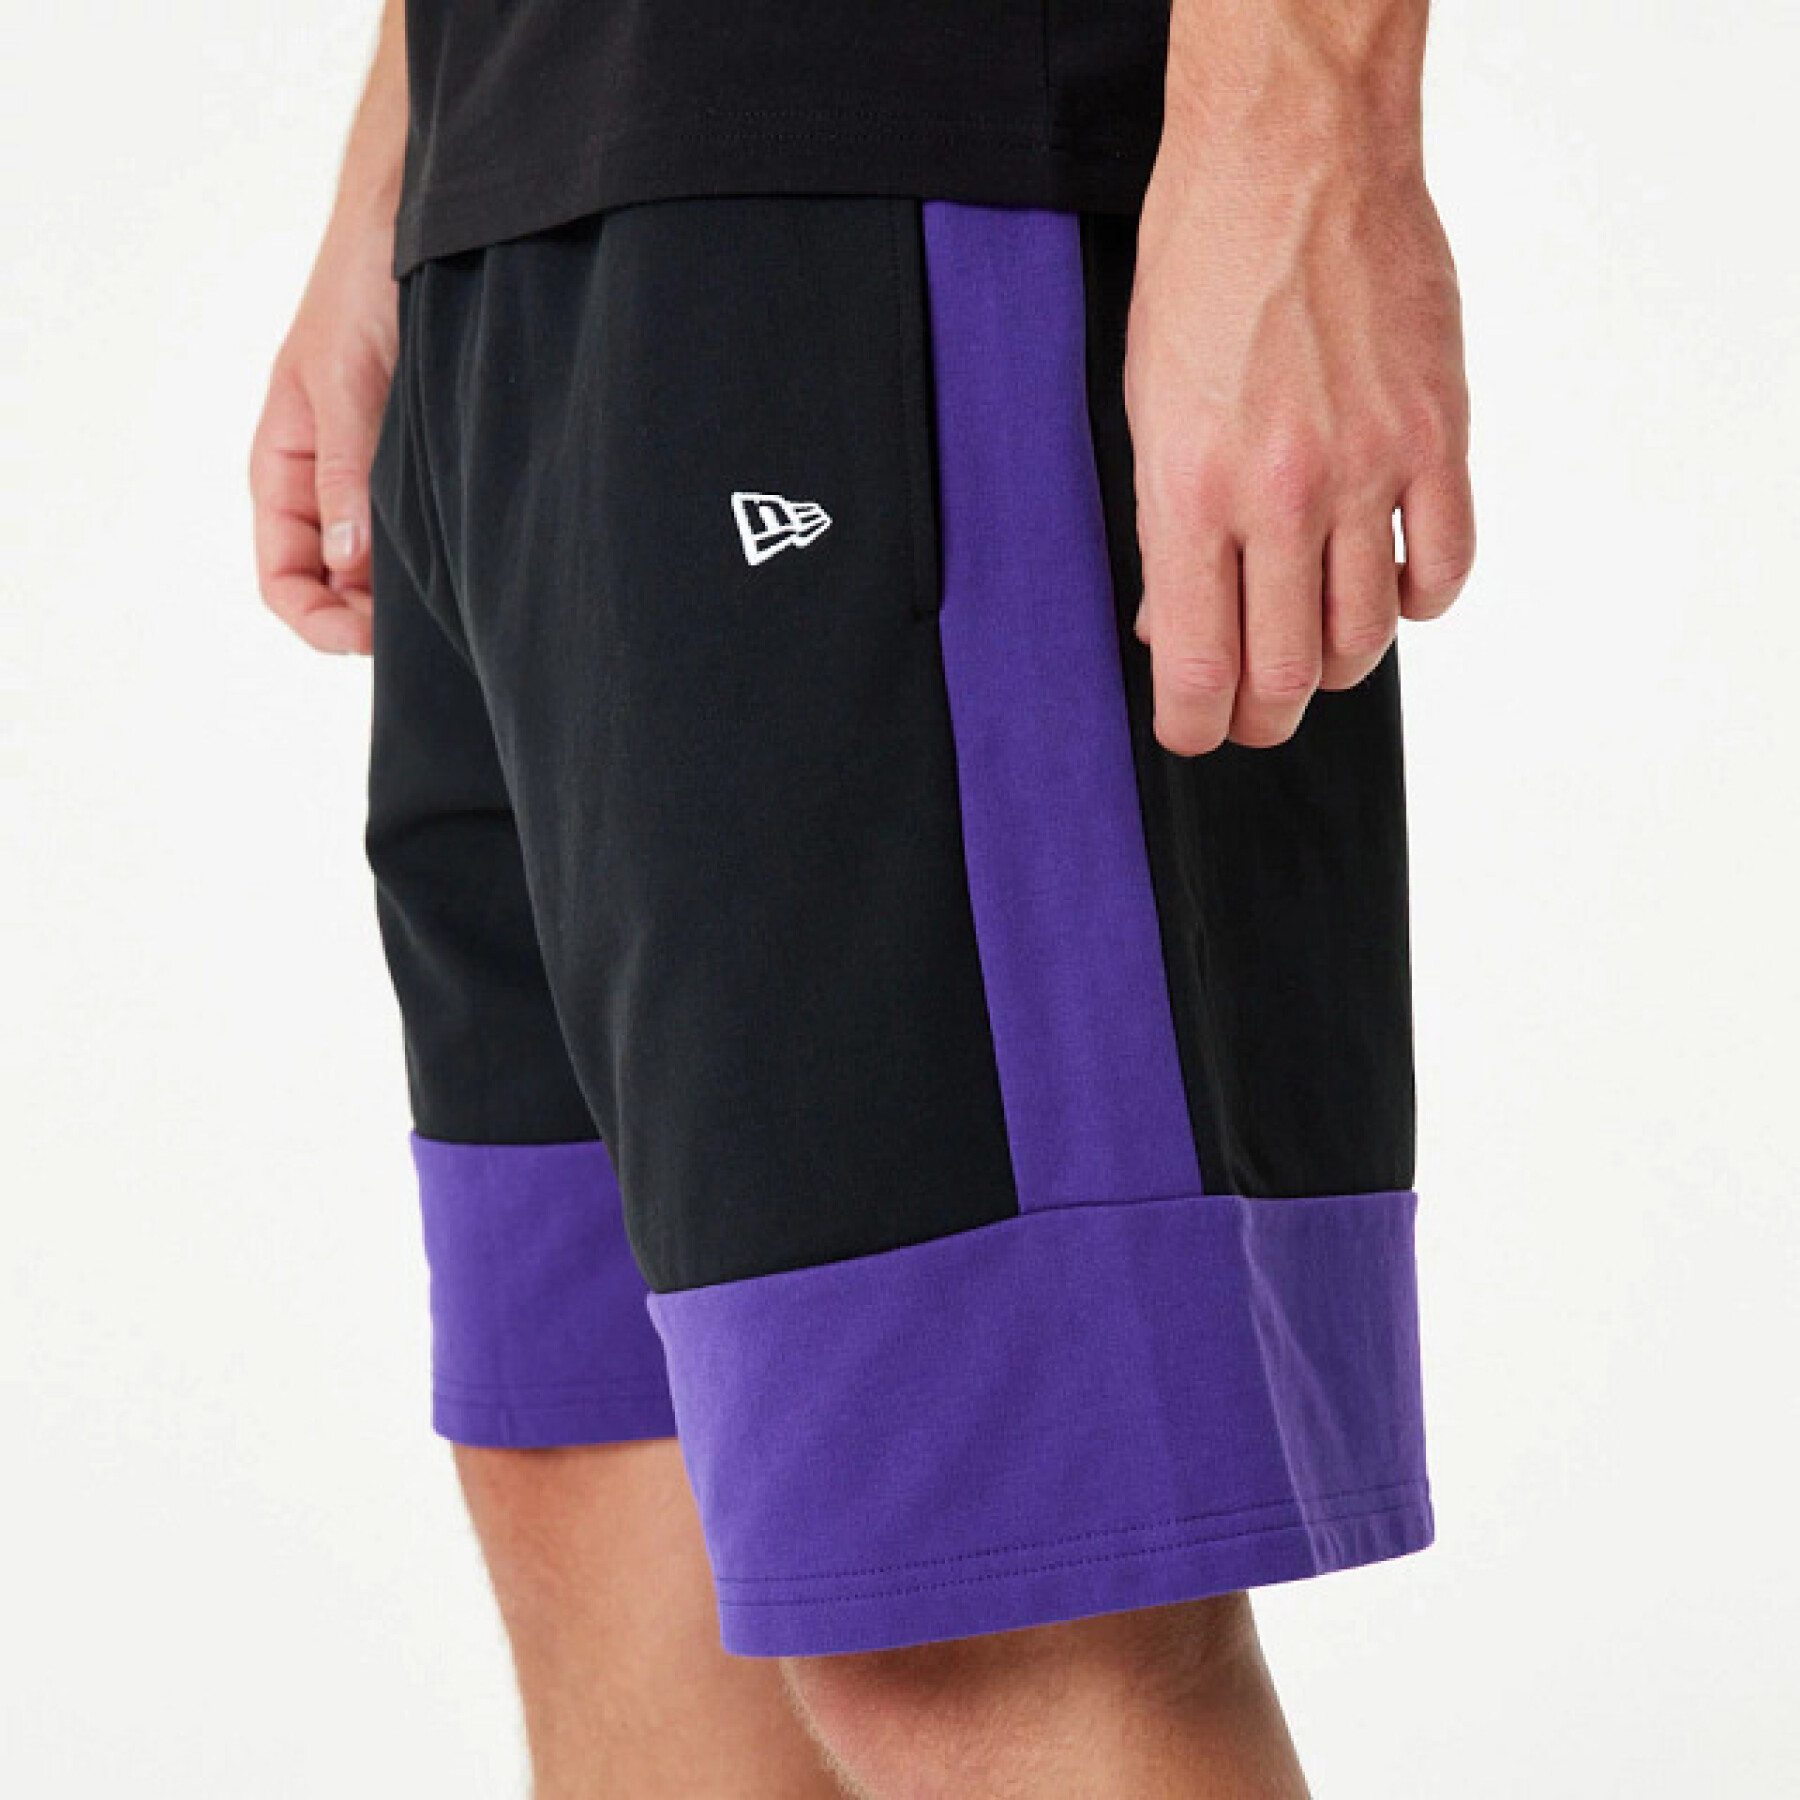 Pantalones cortos Lakers nba colour block